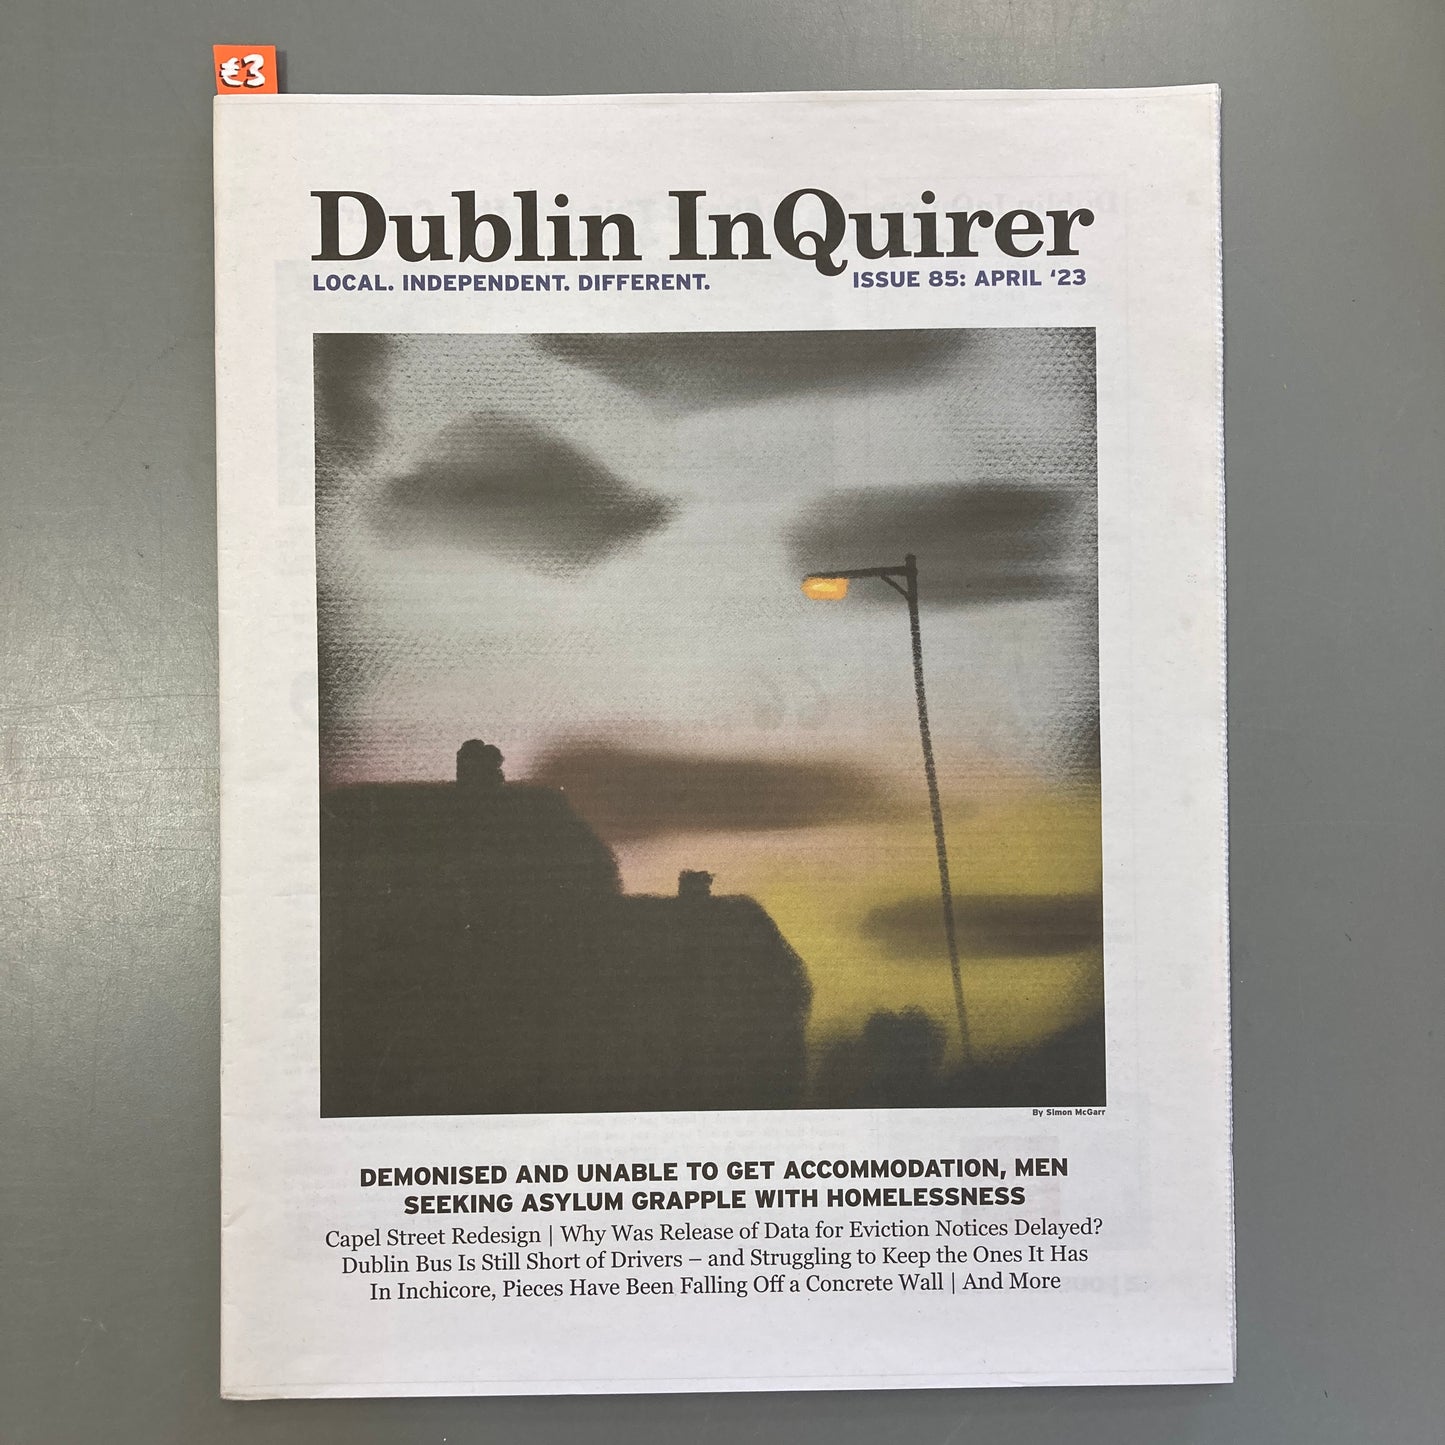 Dublin Inquirer: Issue 85